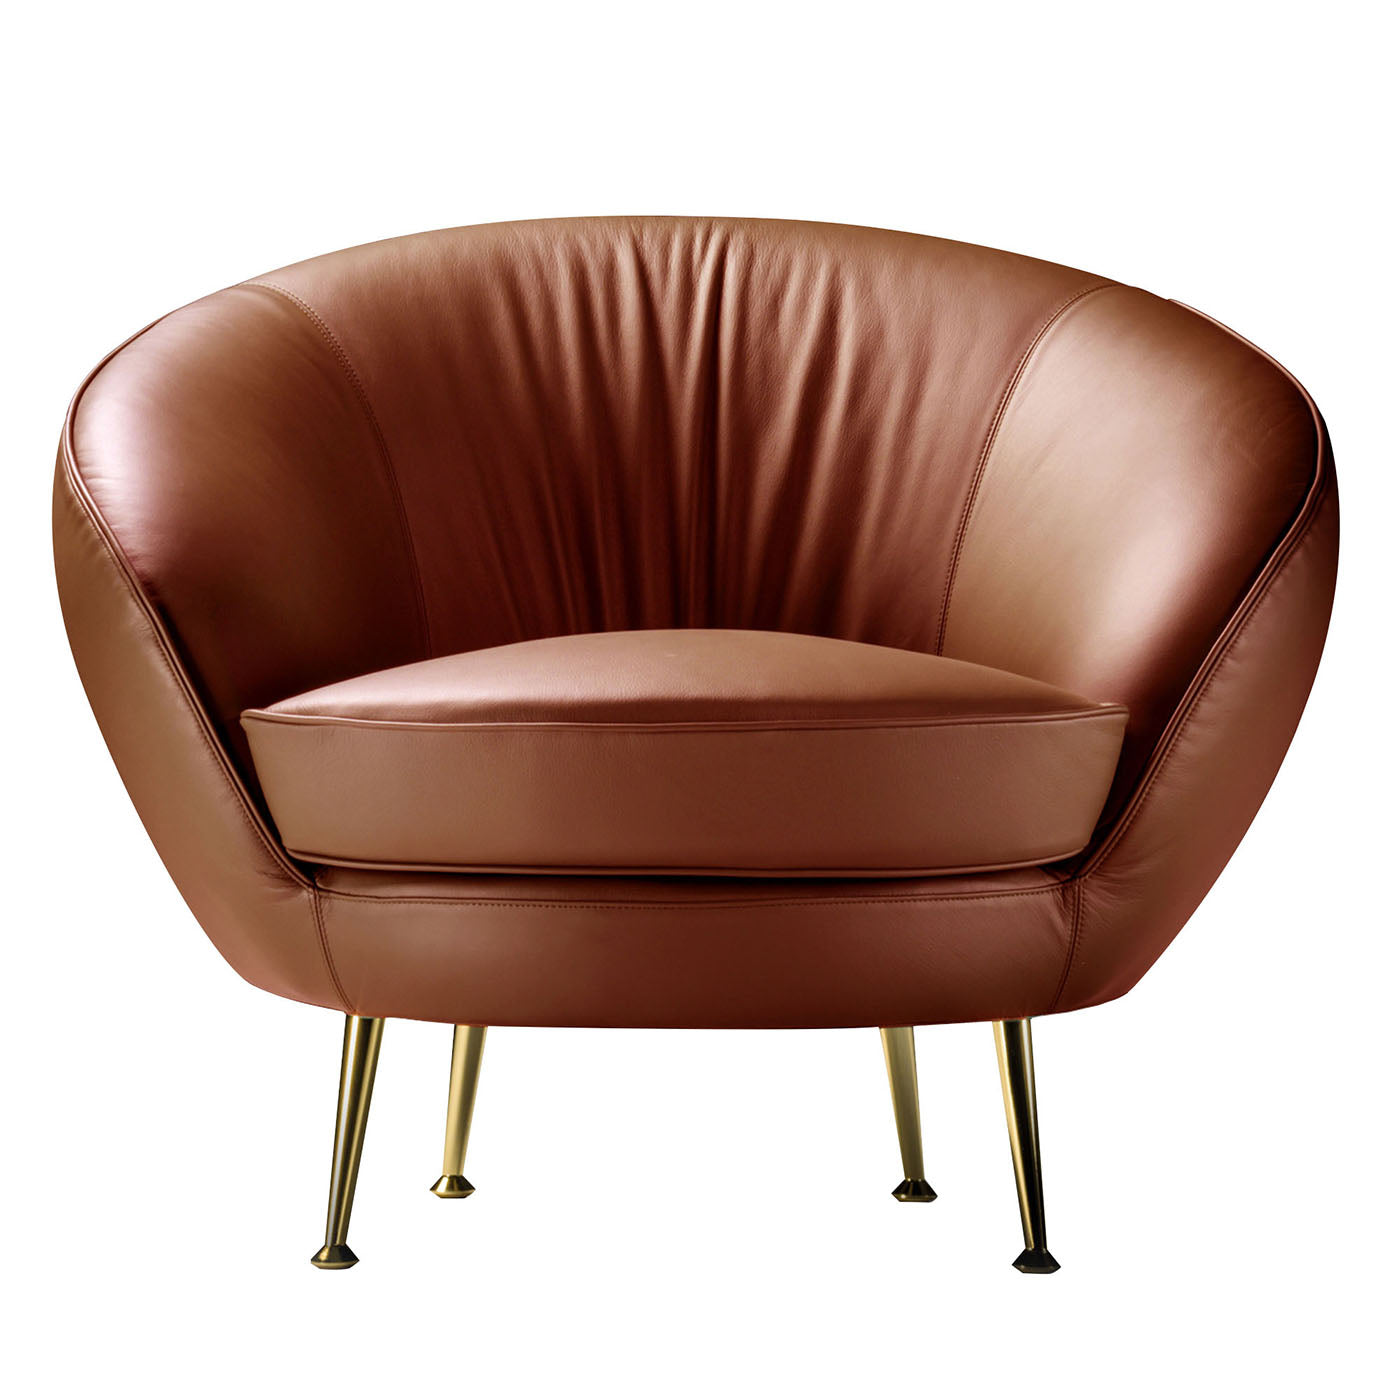 Giulia Brown Leather Lounge Chair - Main view